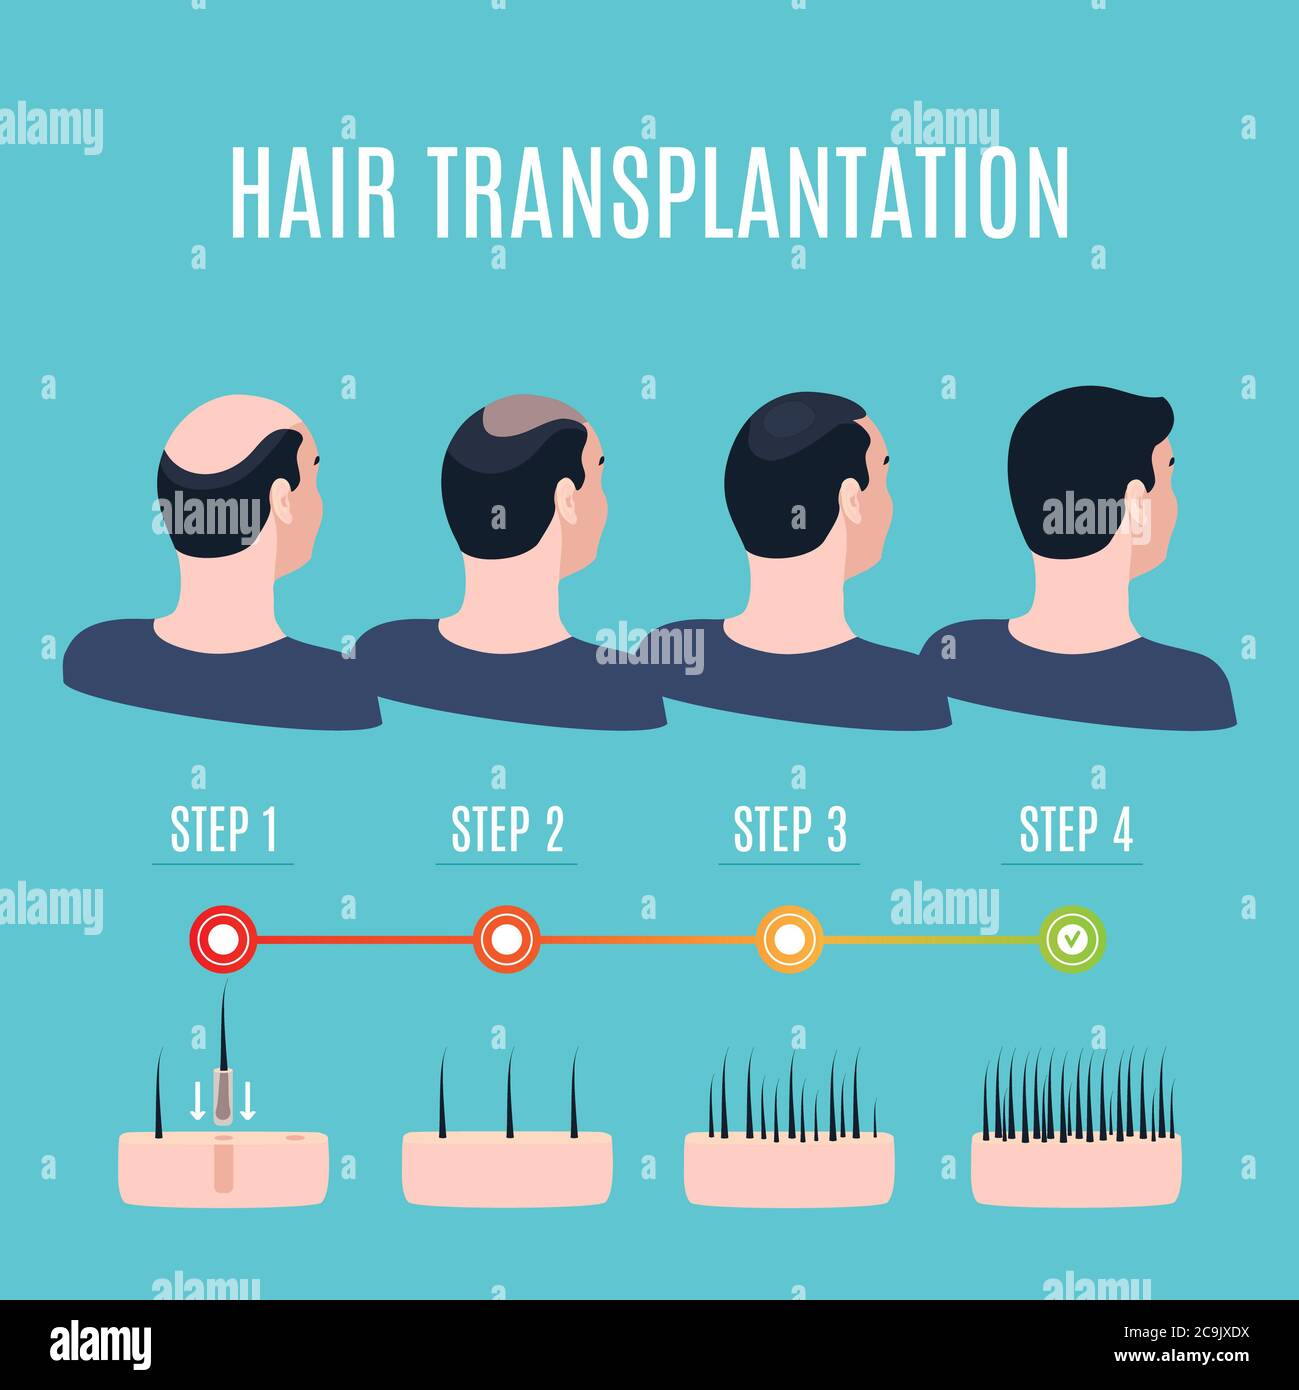 Hair transplantation surgery stages, illustration. Stock Photo